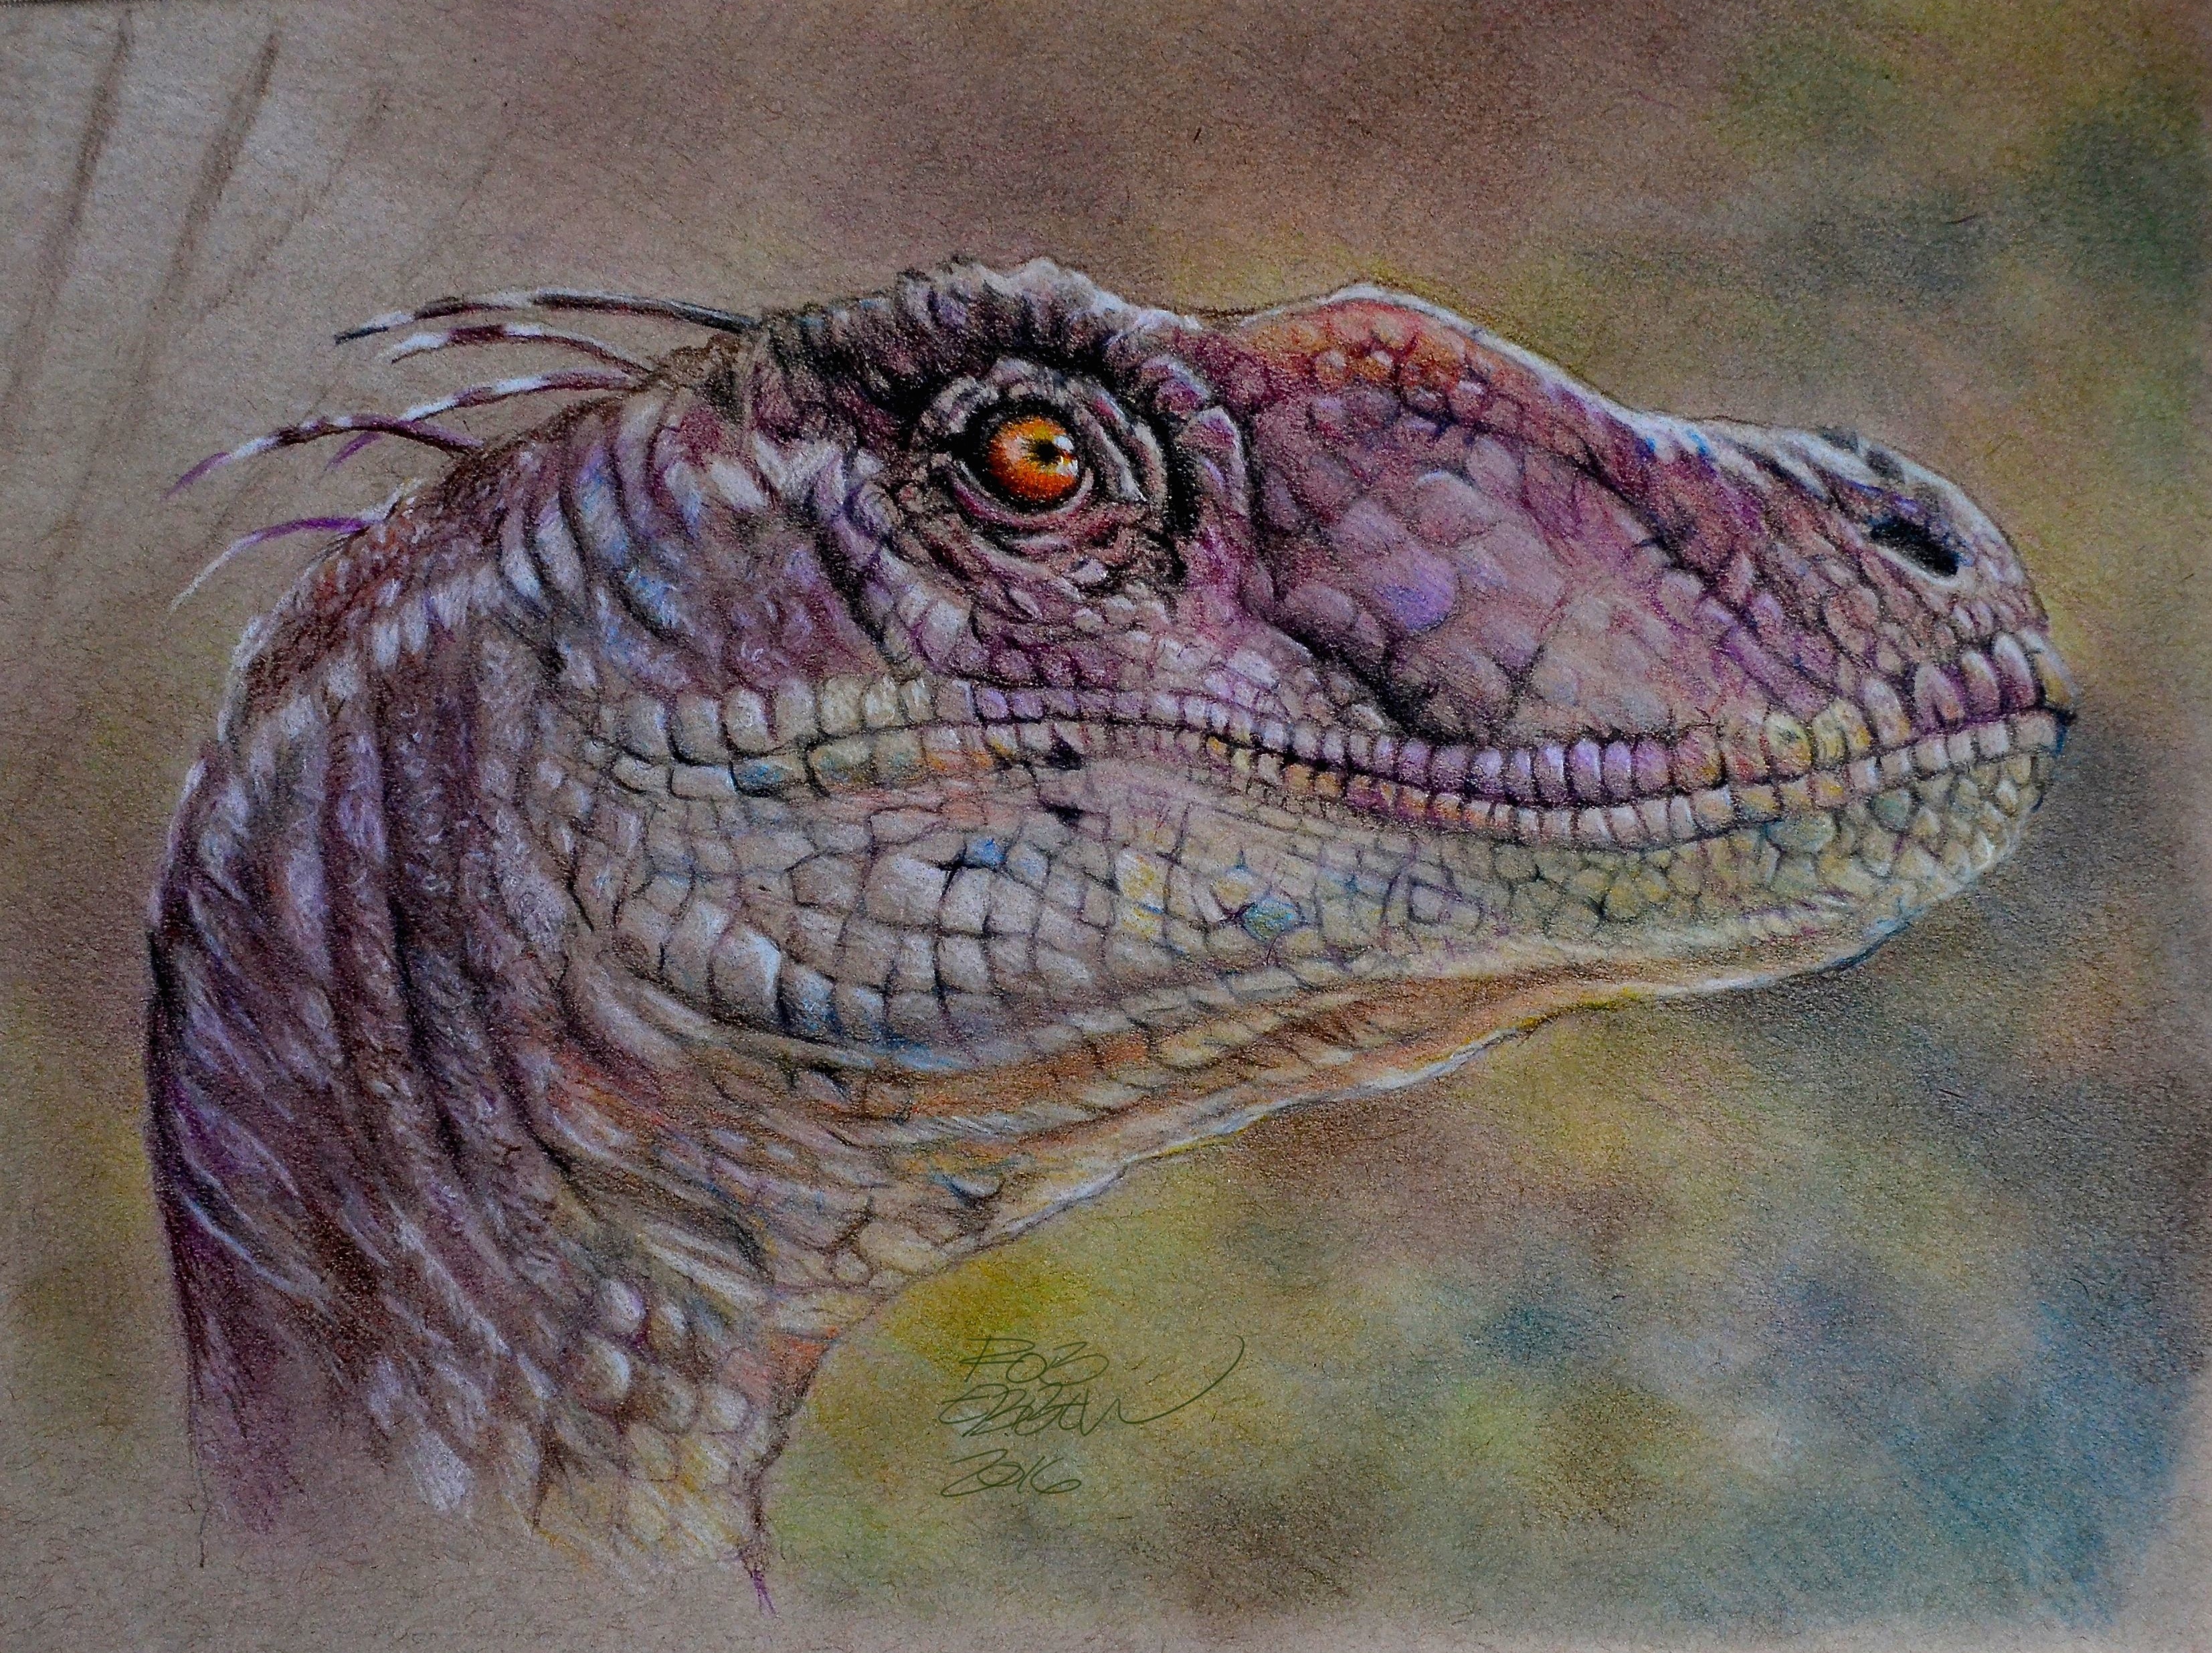 Animal Velociraptor HD Wallpaper | Background Image